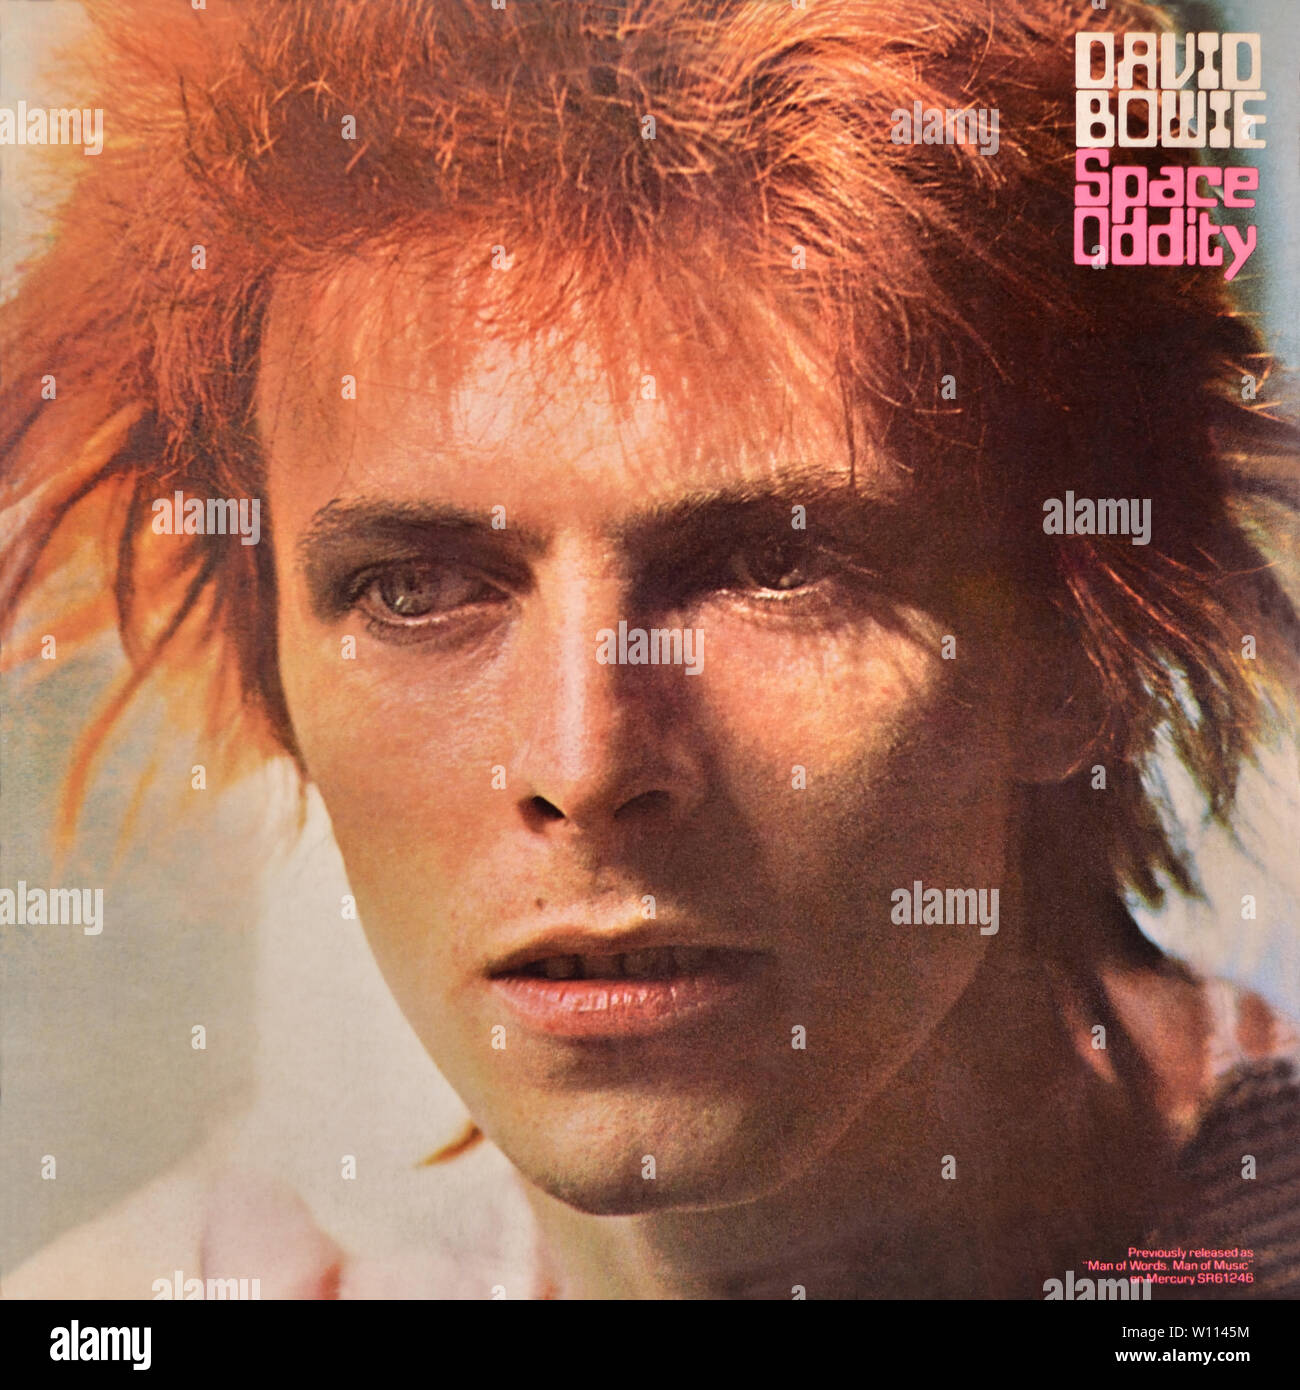 David Bowie - original Vinyl Album Cover - Space Oddity - 1972 Stockfoto